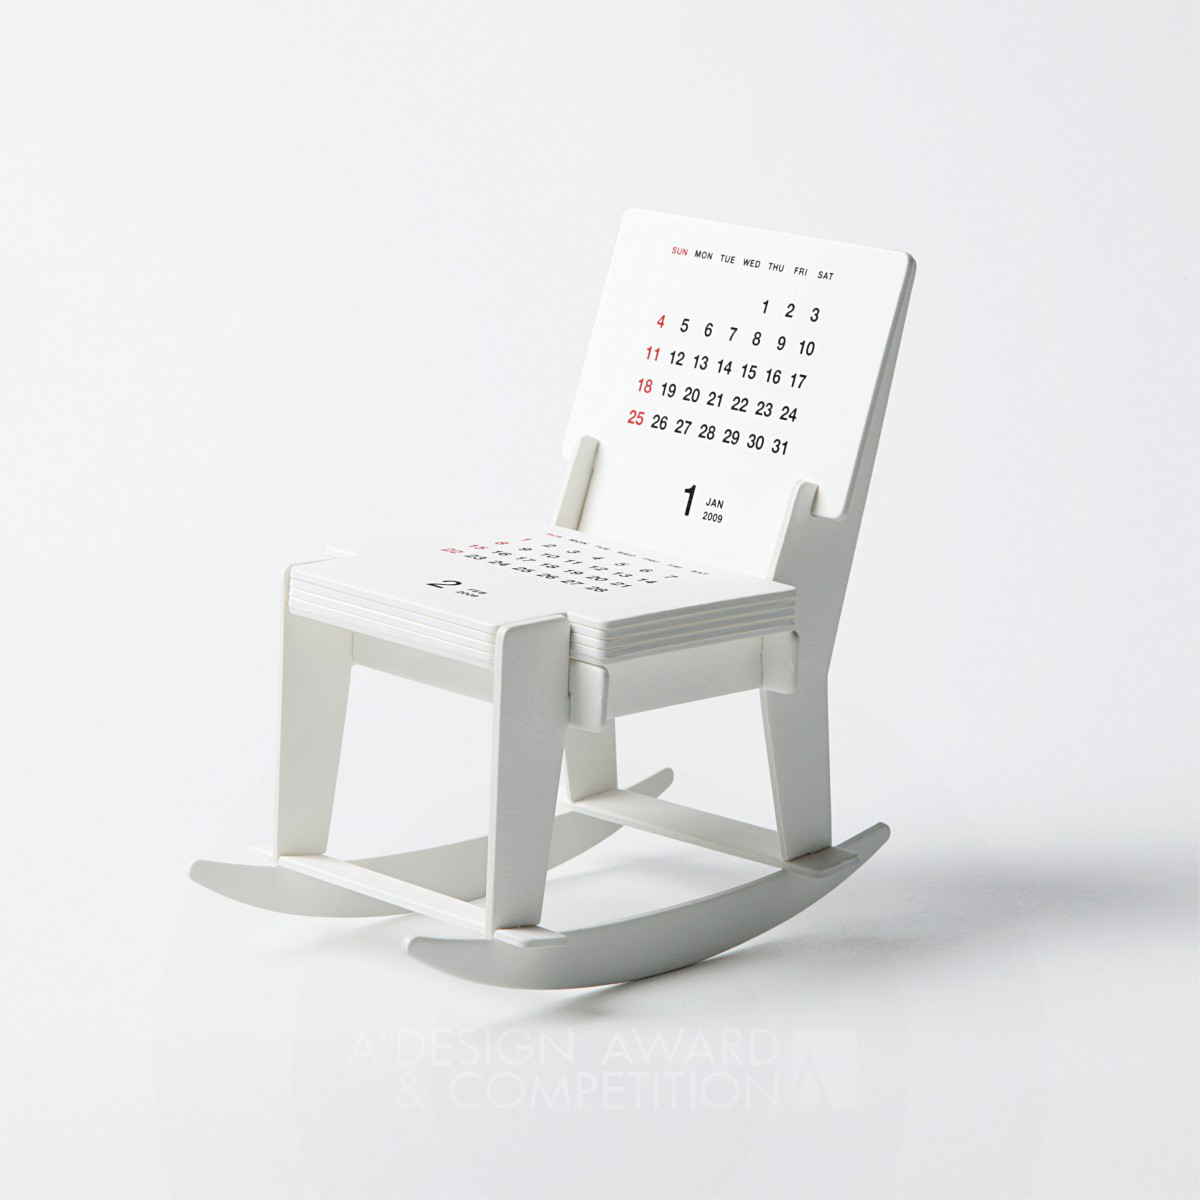 calendar 2013 “Rocking Chair” <b>Calendar